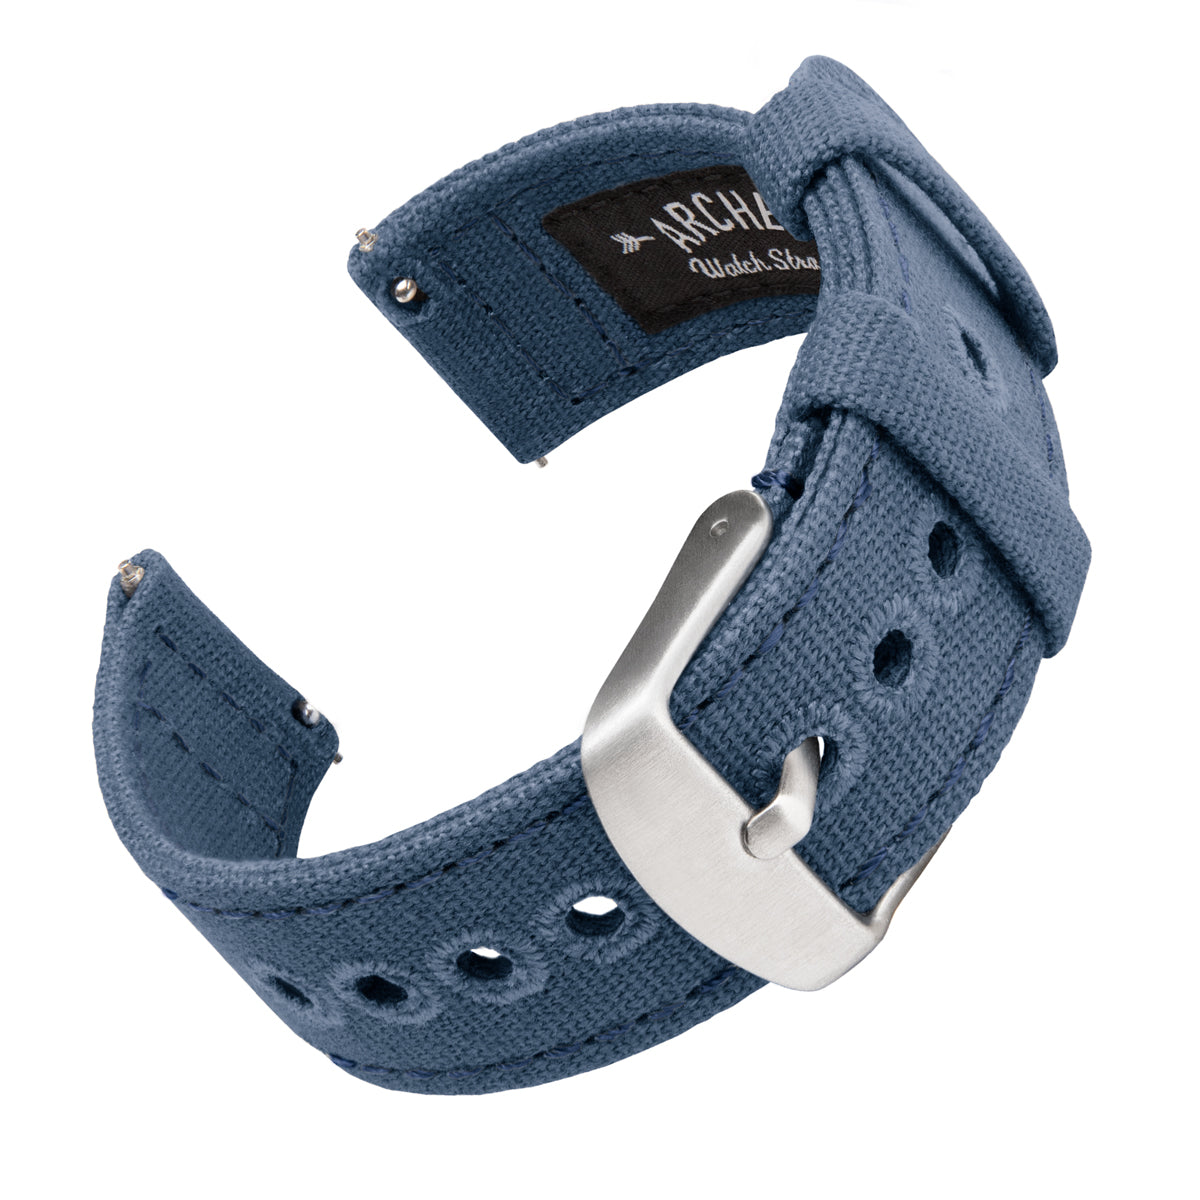 Buy TechKing Round Dial Series Analogue White Dial Fabric Strape Fashion  Wrist Watch for Men/Boys at Amazon.in